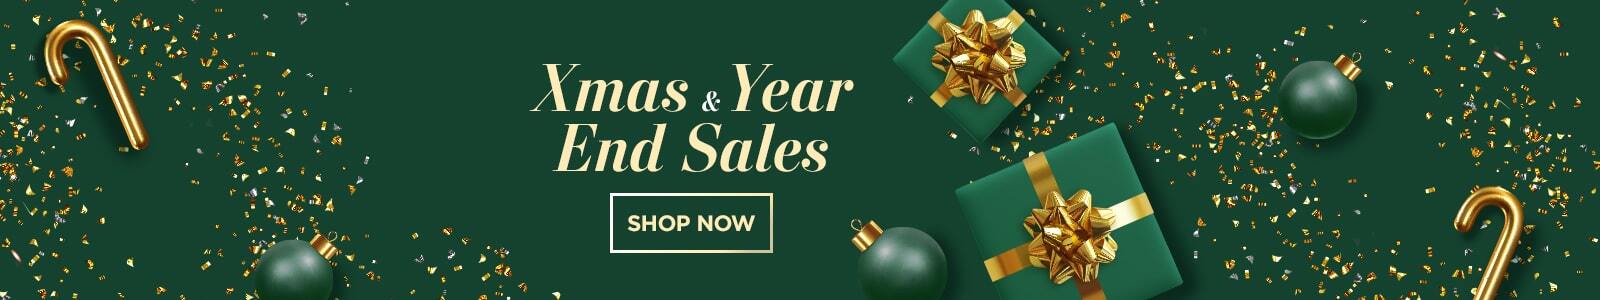 Xmas & Year End Sales Shop Now